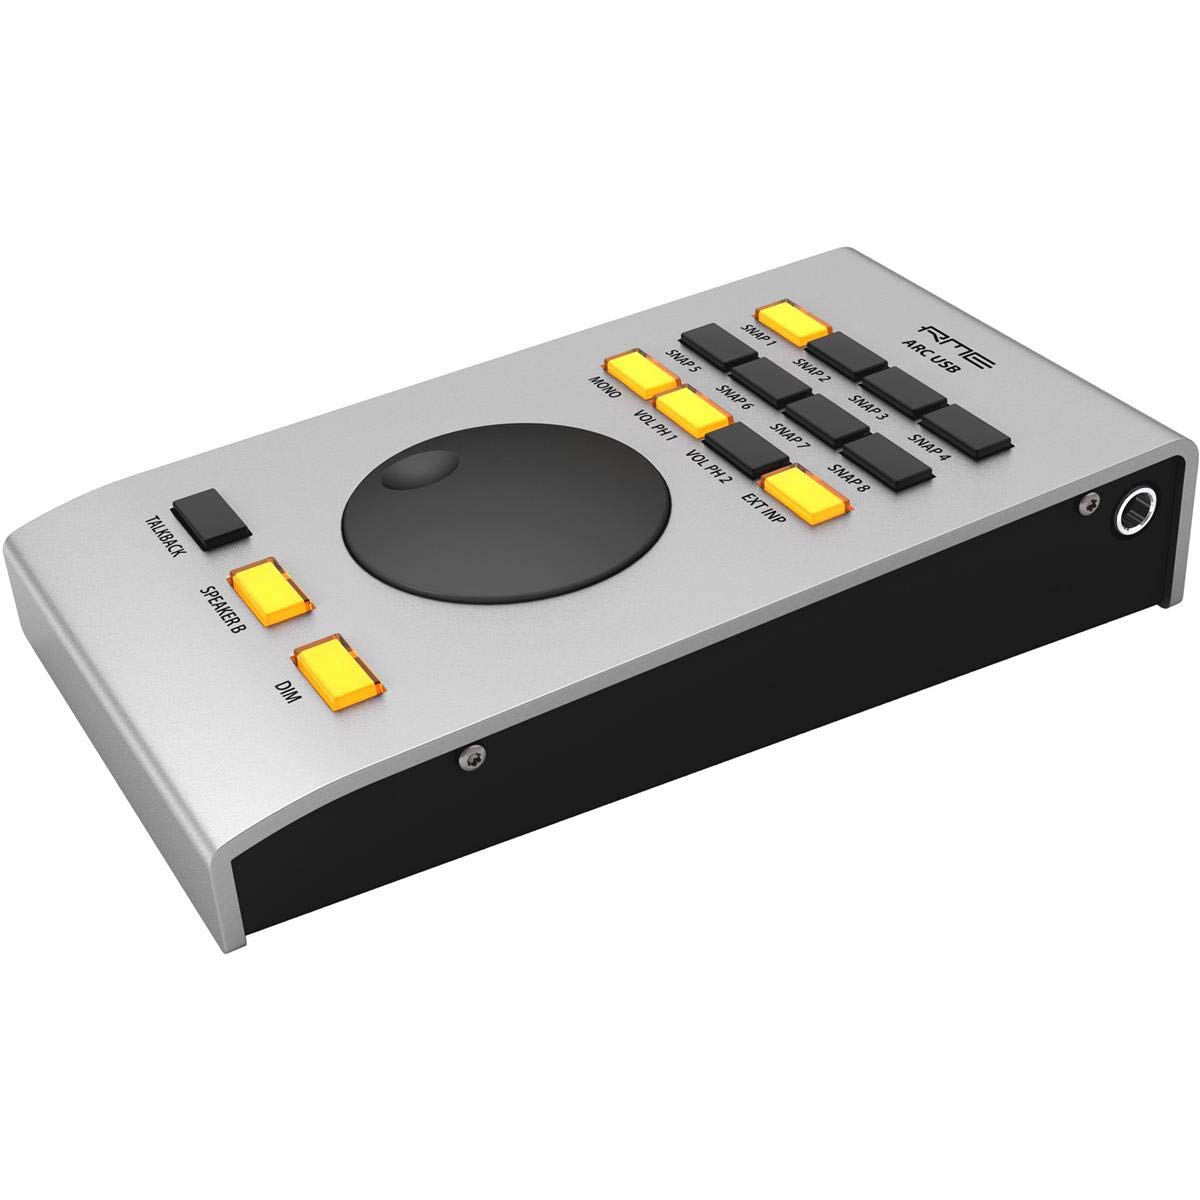 RME Control remoto ARC-USB para interfaces de audio